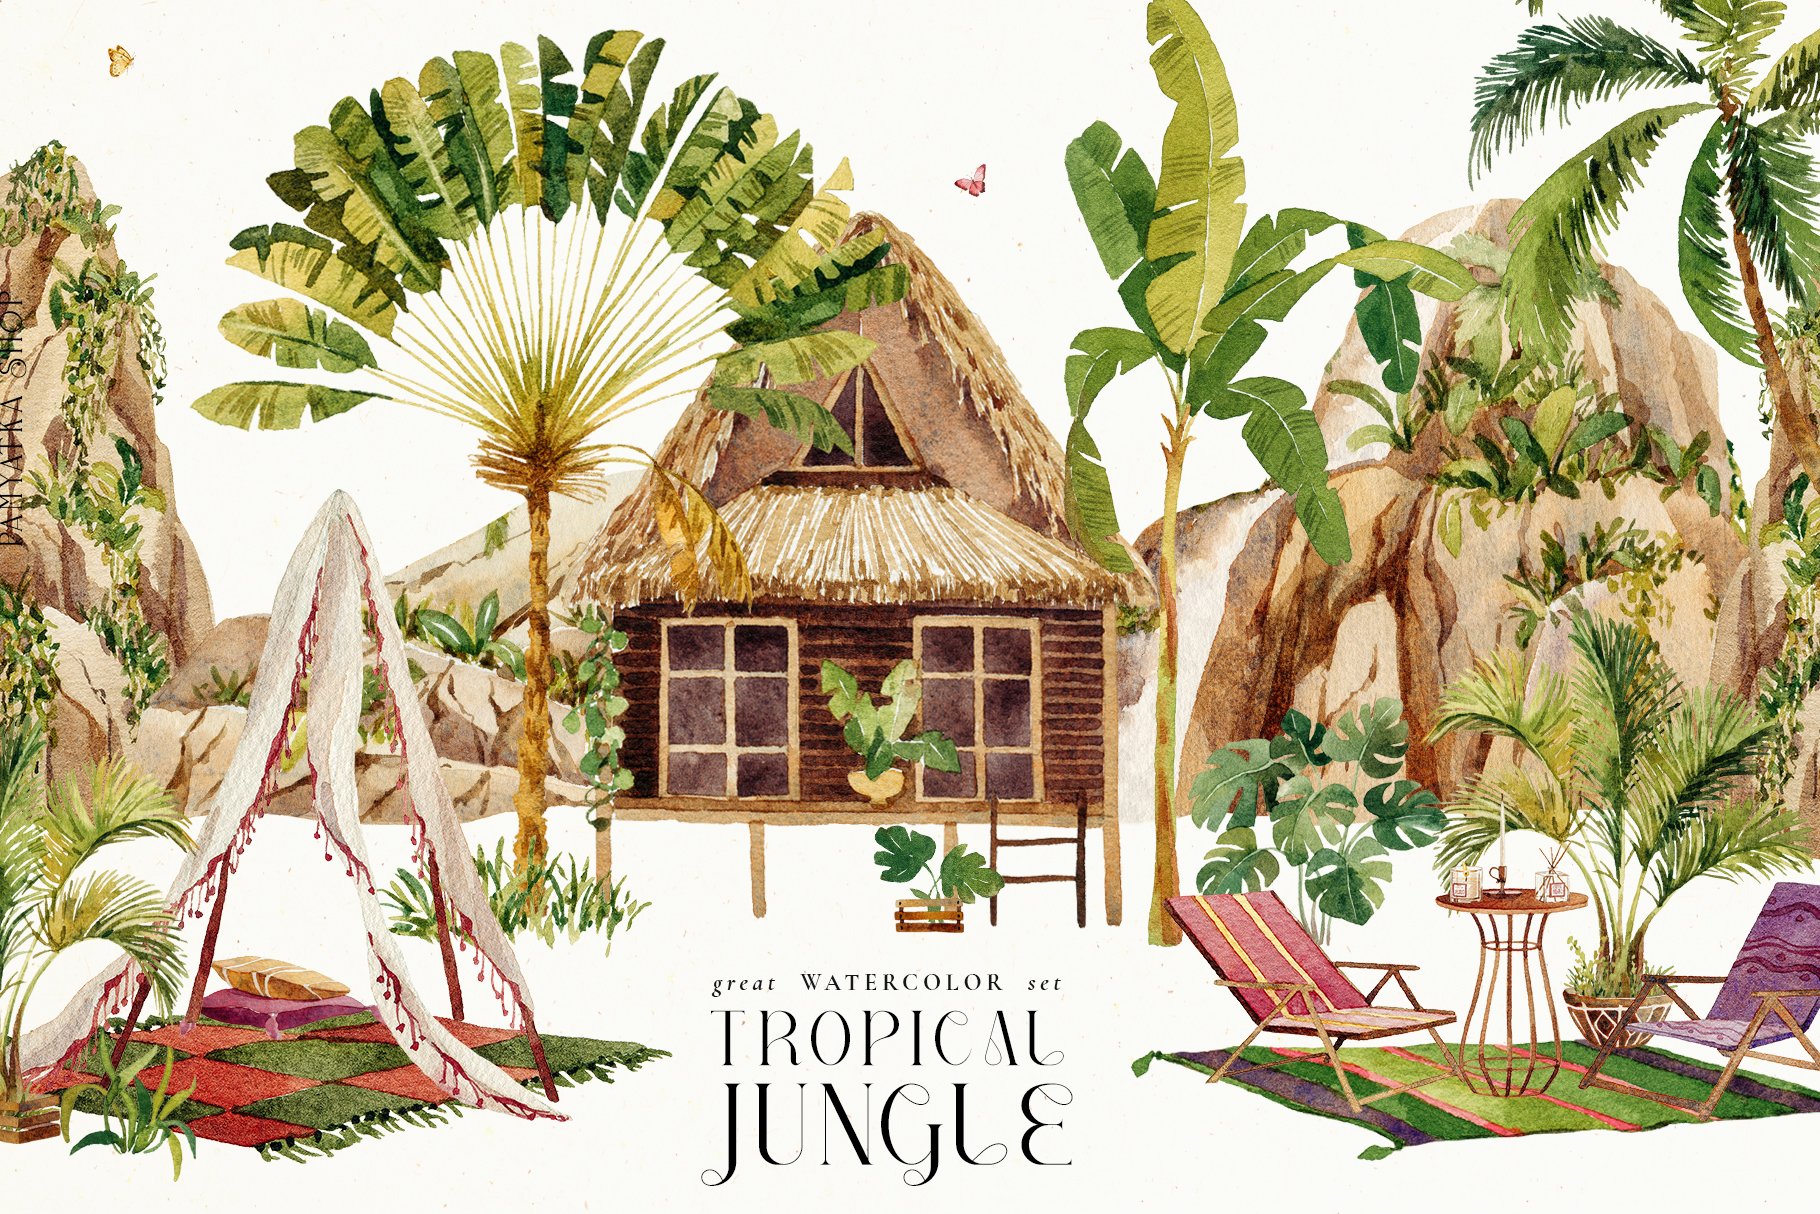 Tropical jungle - watercolor set cover image.